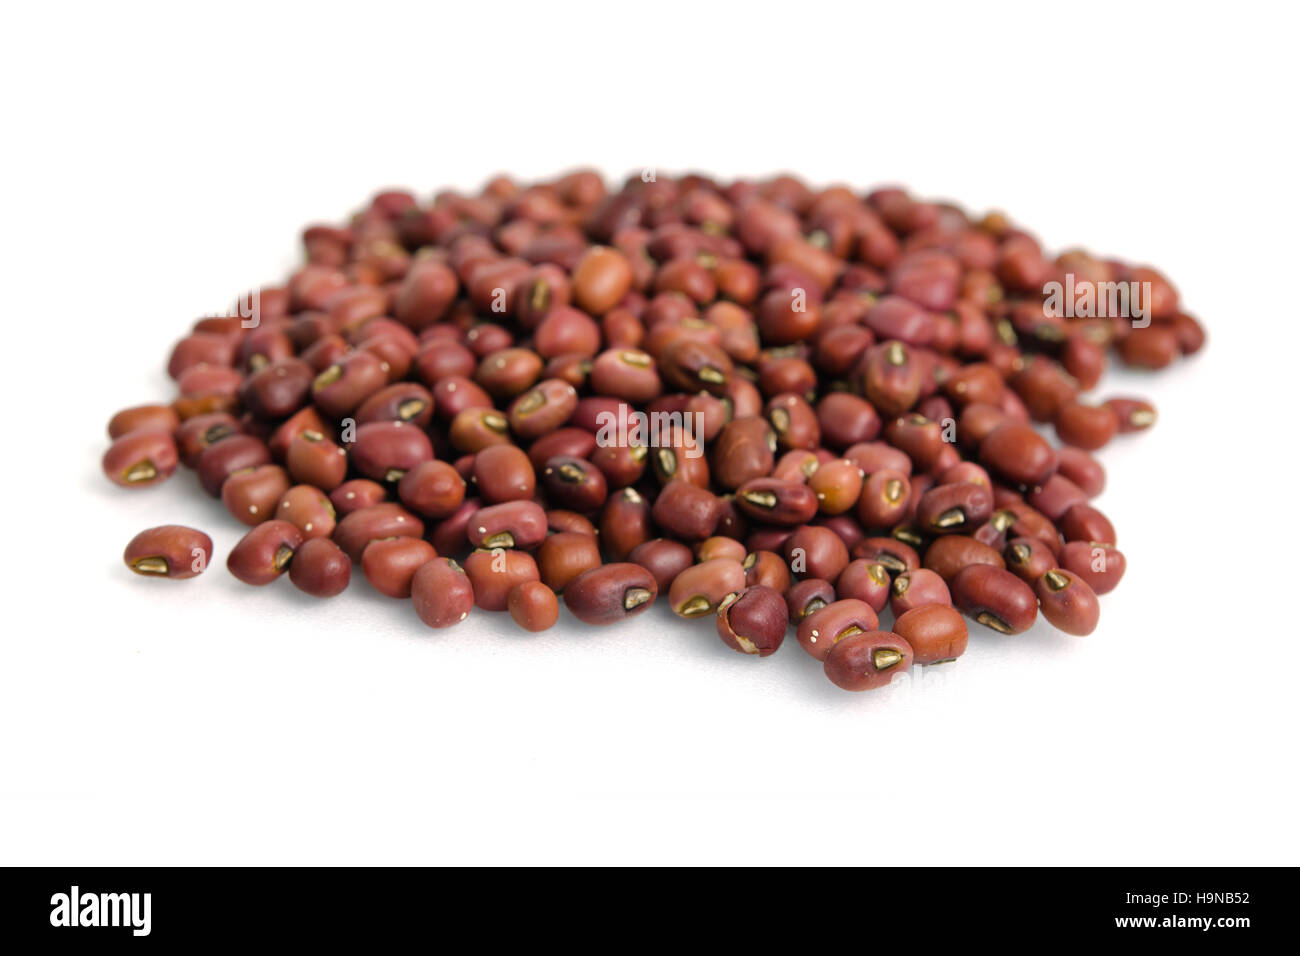 Kidney beans (Also named as Phasecolus vulgaris bean, red kidney beans or kidney beans) isolated on white Stock Photo